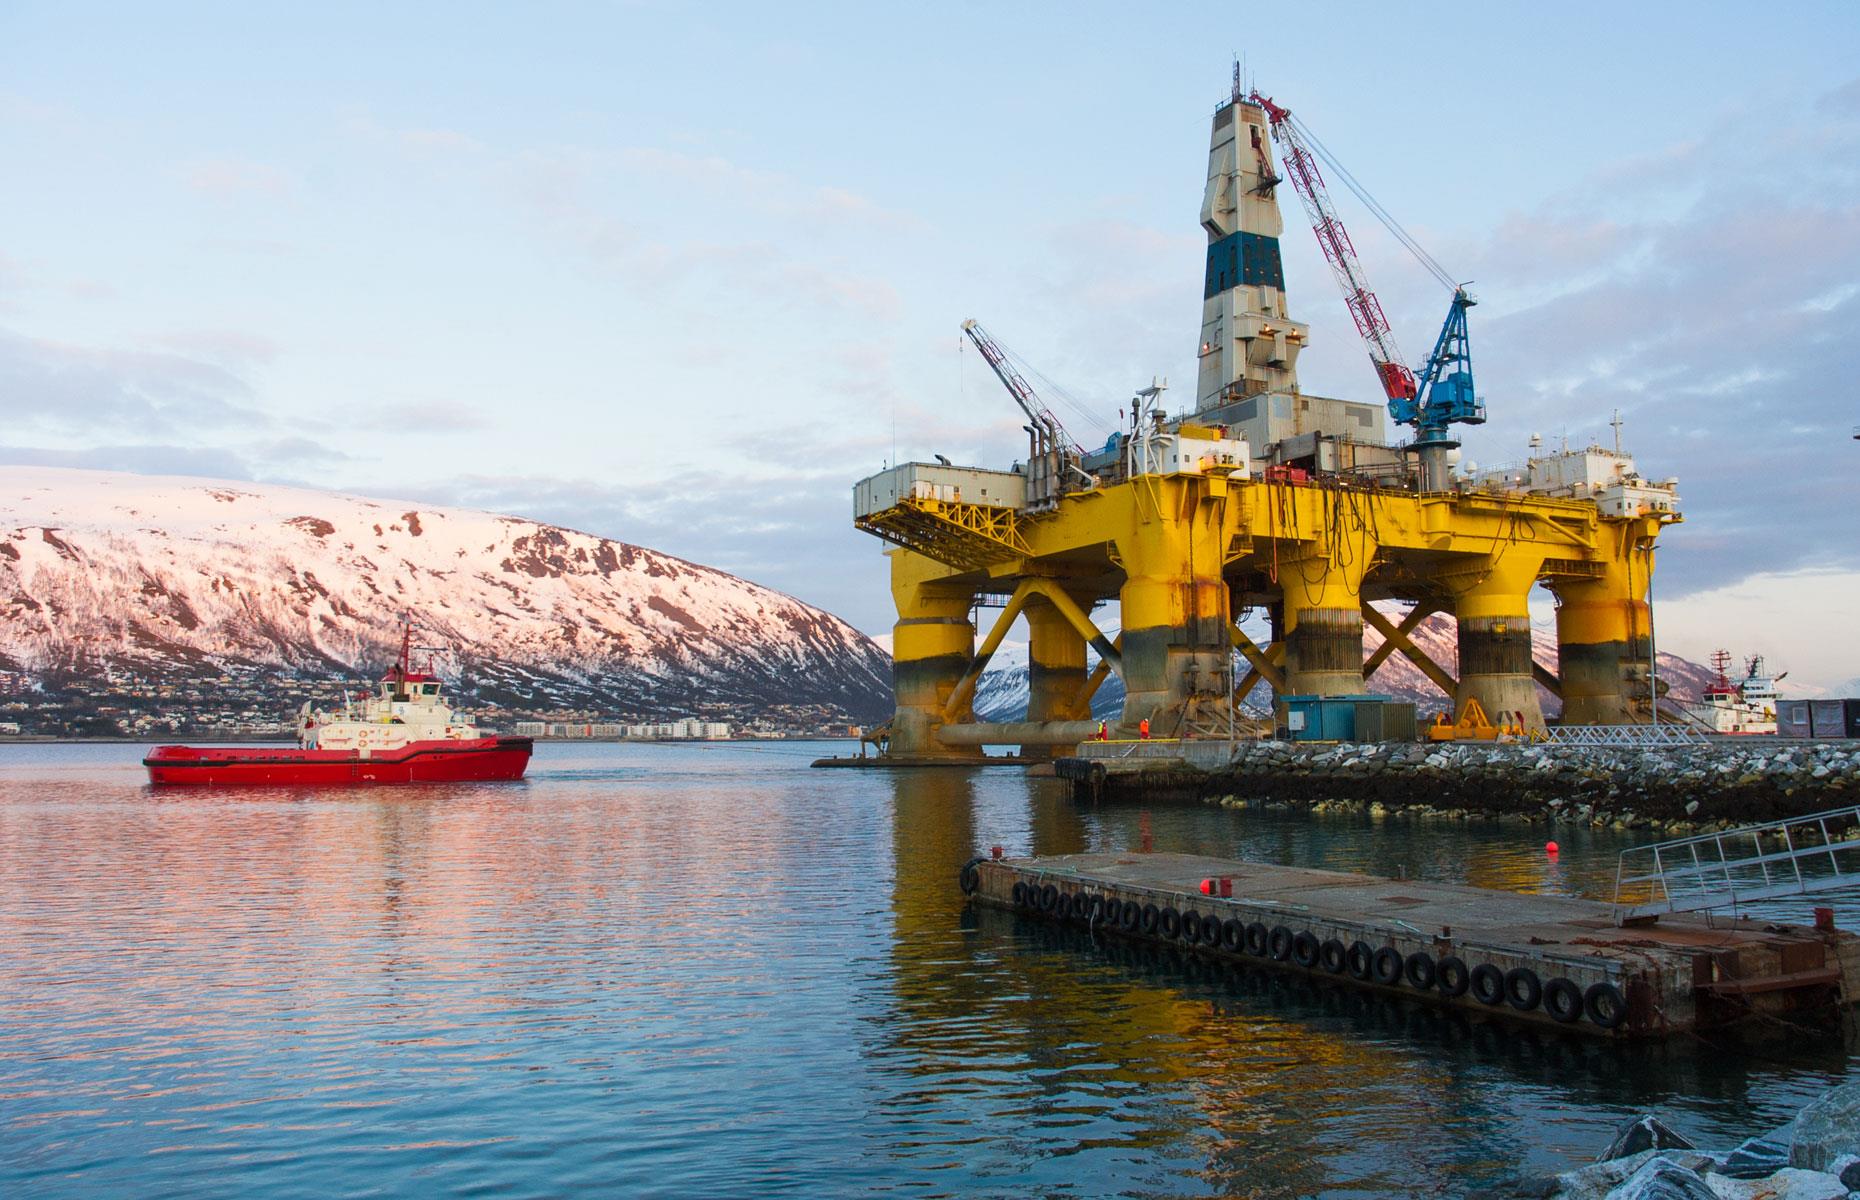 12. Norway: 1.901 million barrels per day